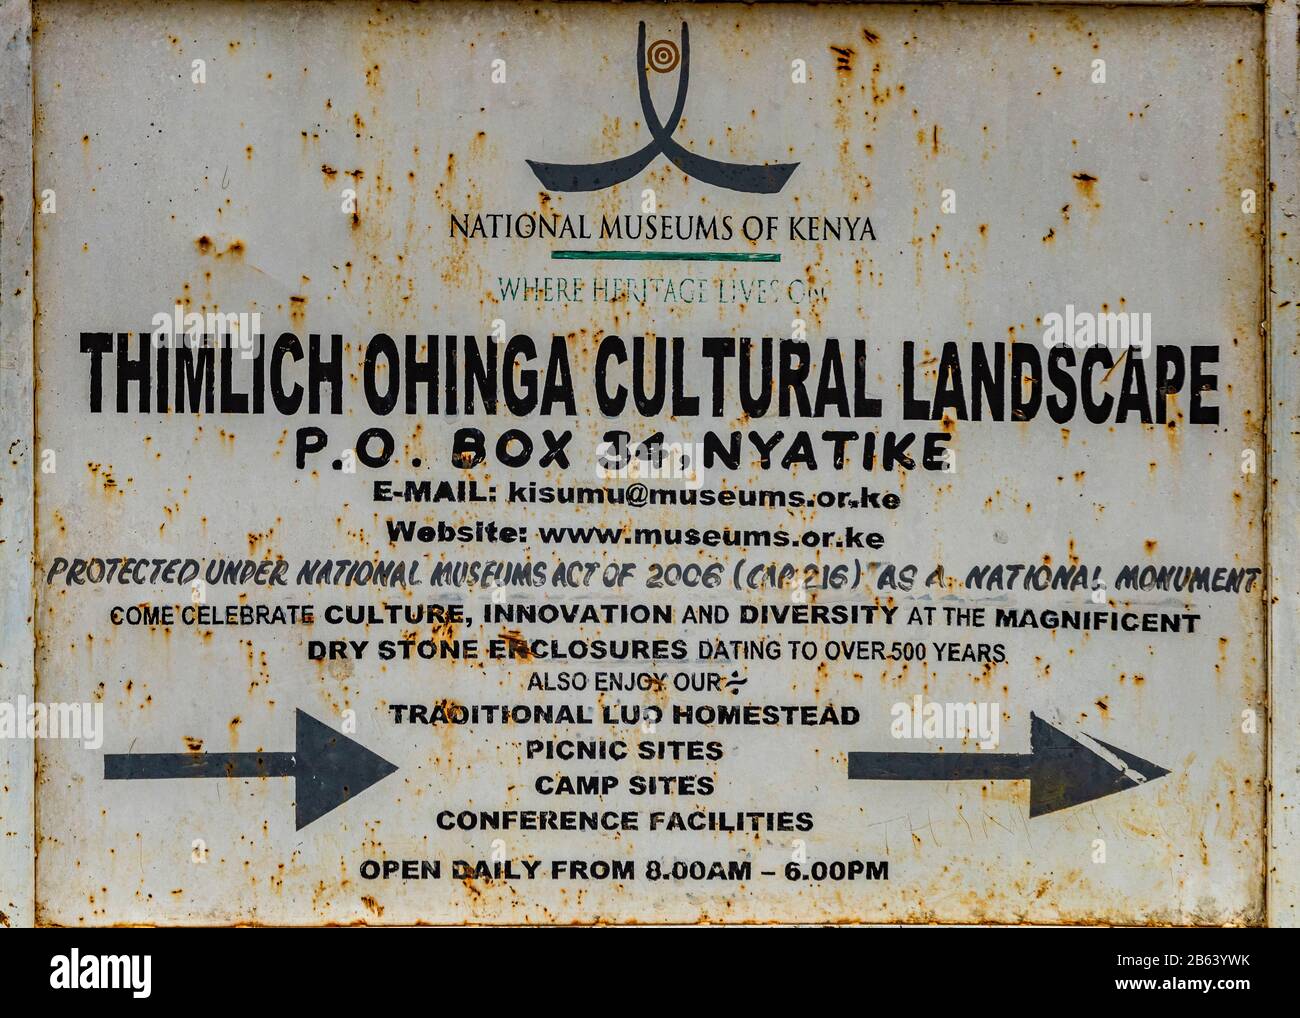 Thimlich Ohinga. Signage and information about stone-built ruins of historic 15th century Iron Age village enclosure, Kenya. Irregular shaped stones. Stock Photo